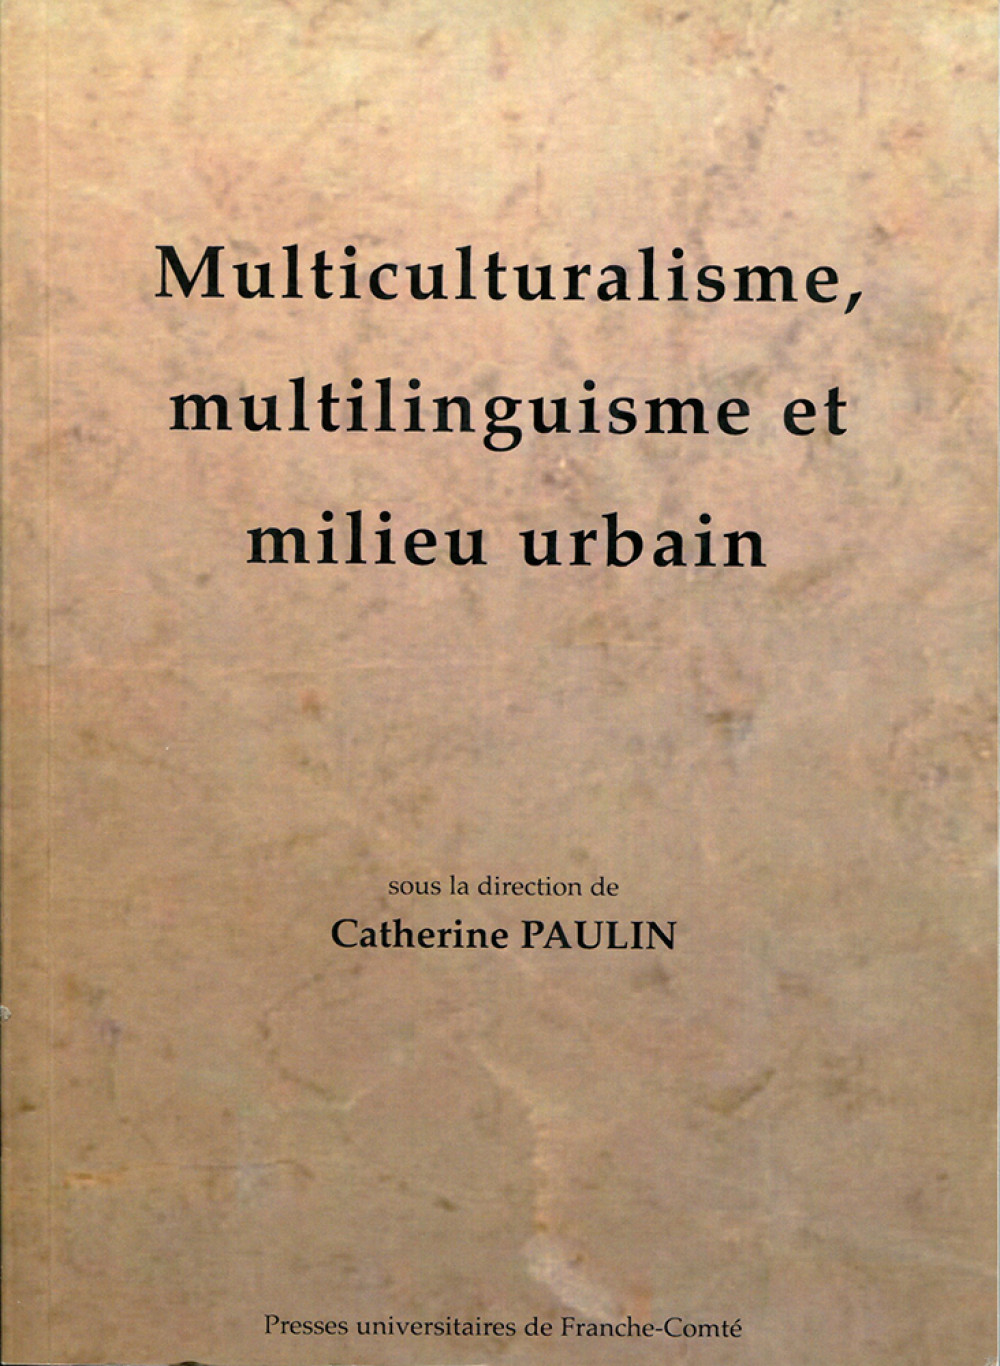 Multiculturalisme, multilinguisme et milieu urbain